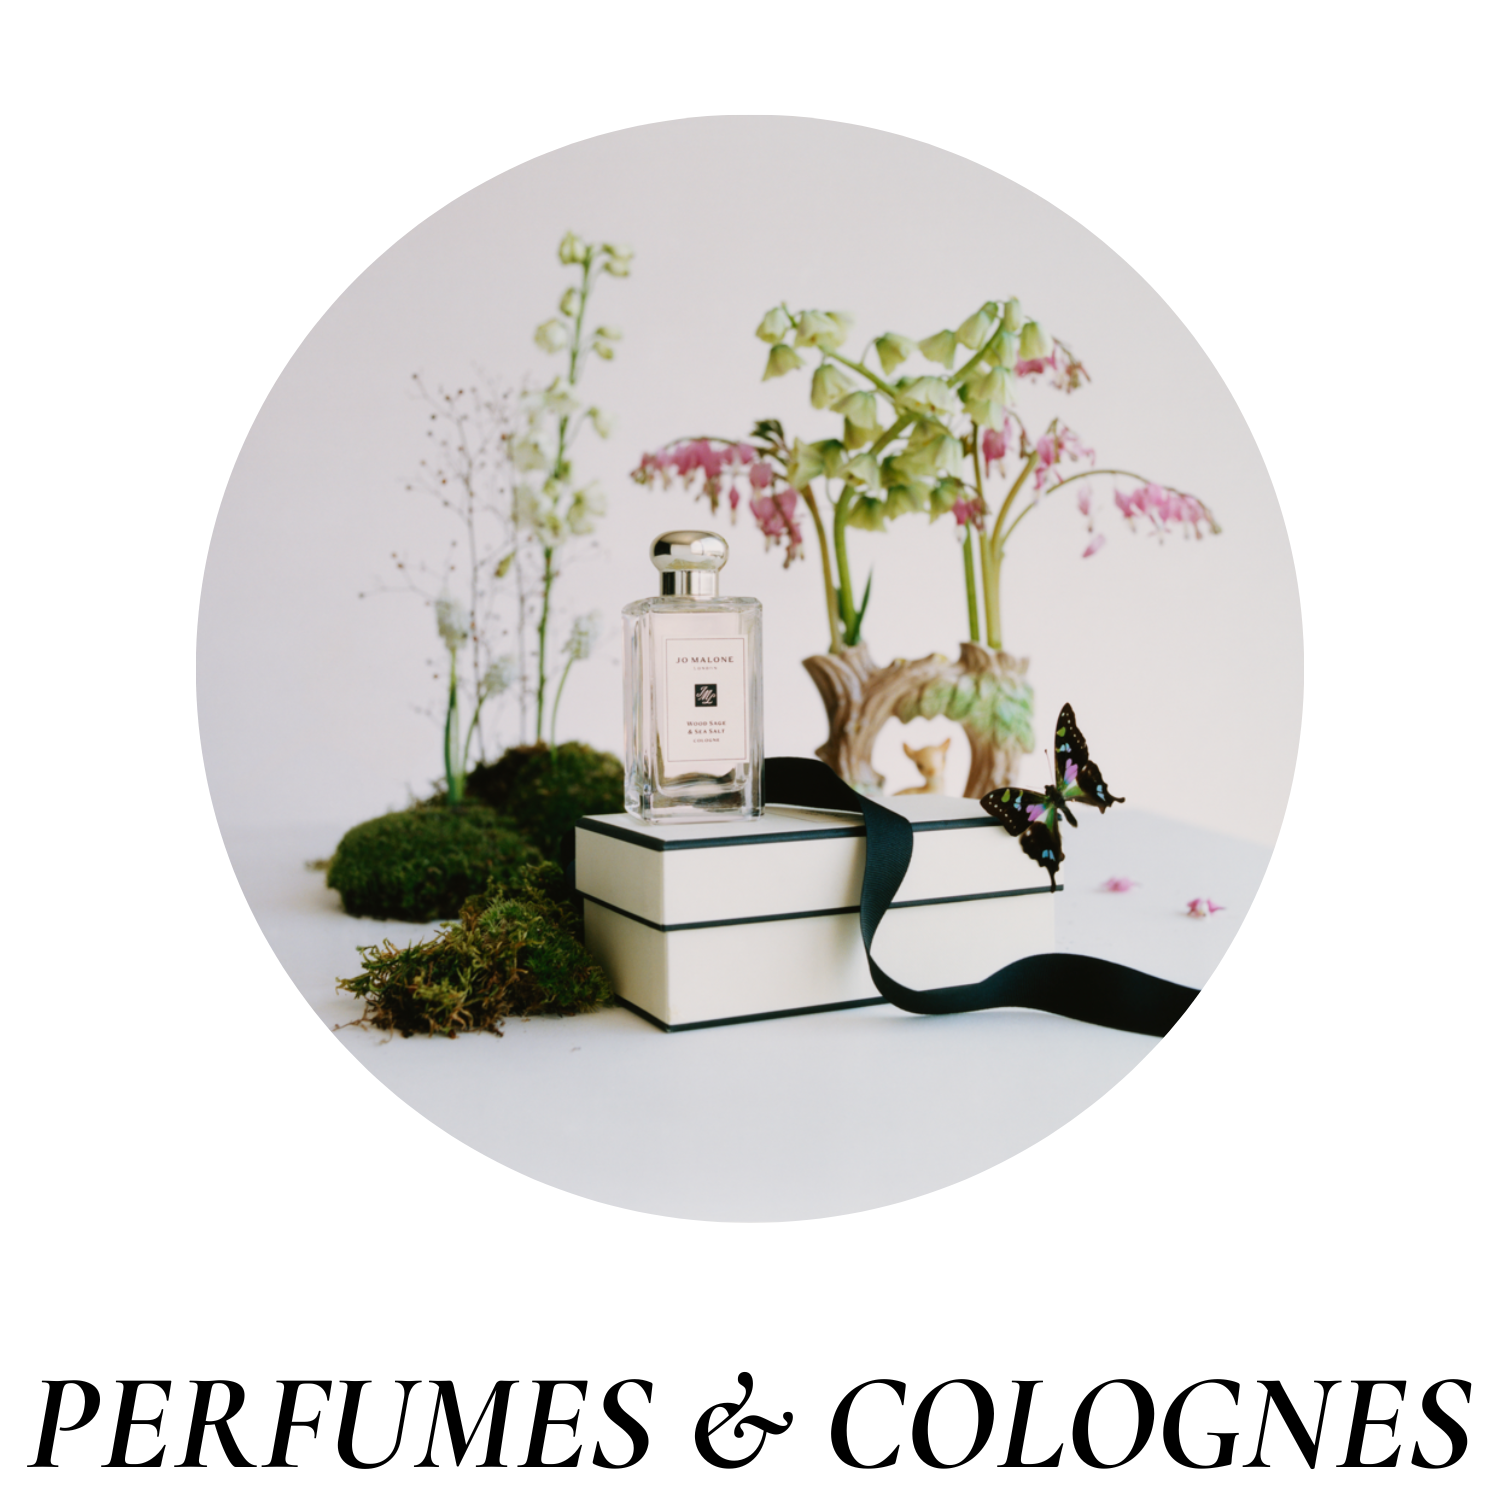 Perfumes & colognes